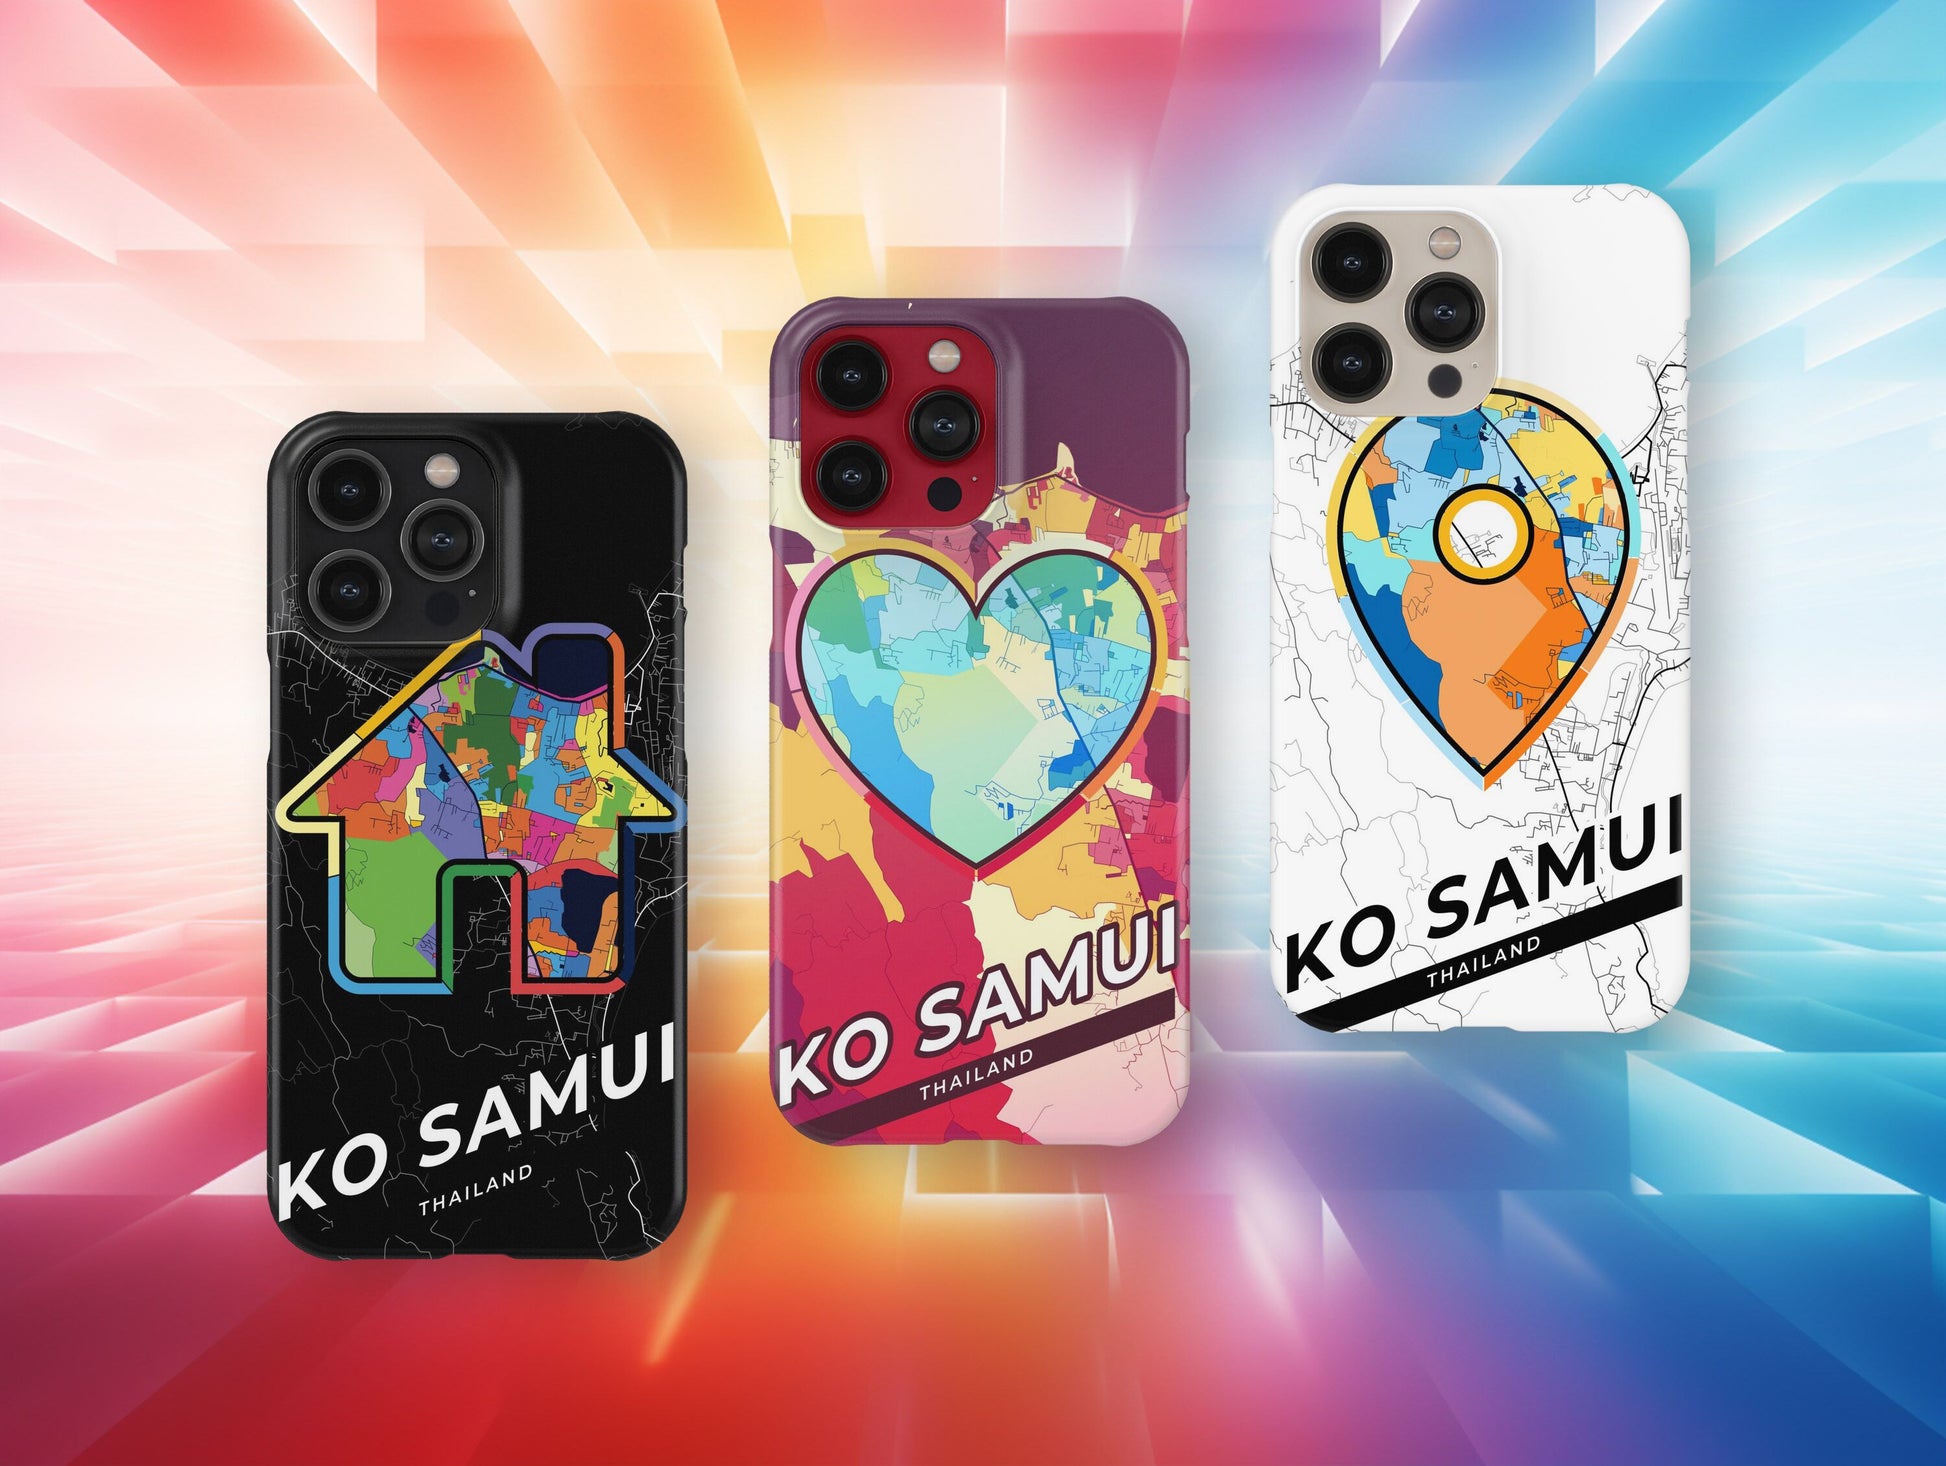 Ko Samui Thailand slim phone case with colorful icon. Birthday, wedding or housewarming gift. Couple match cases.